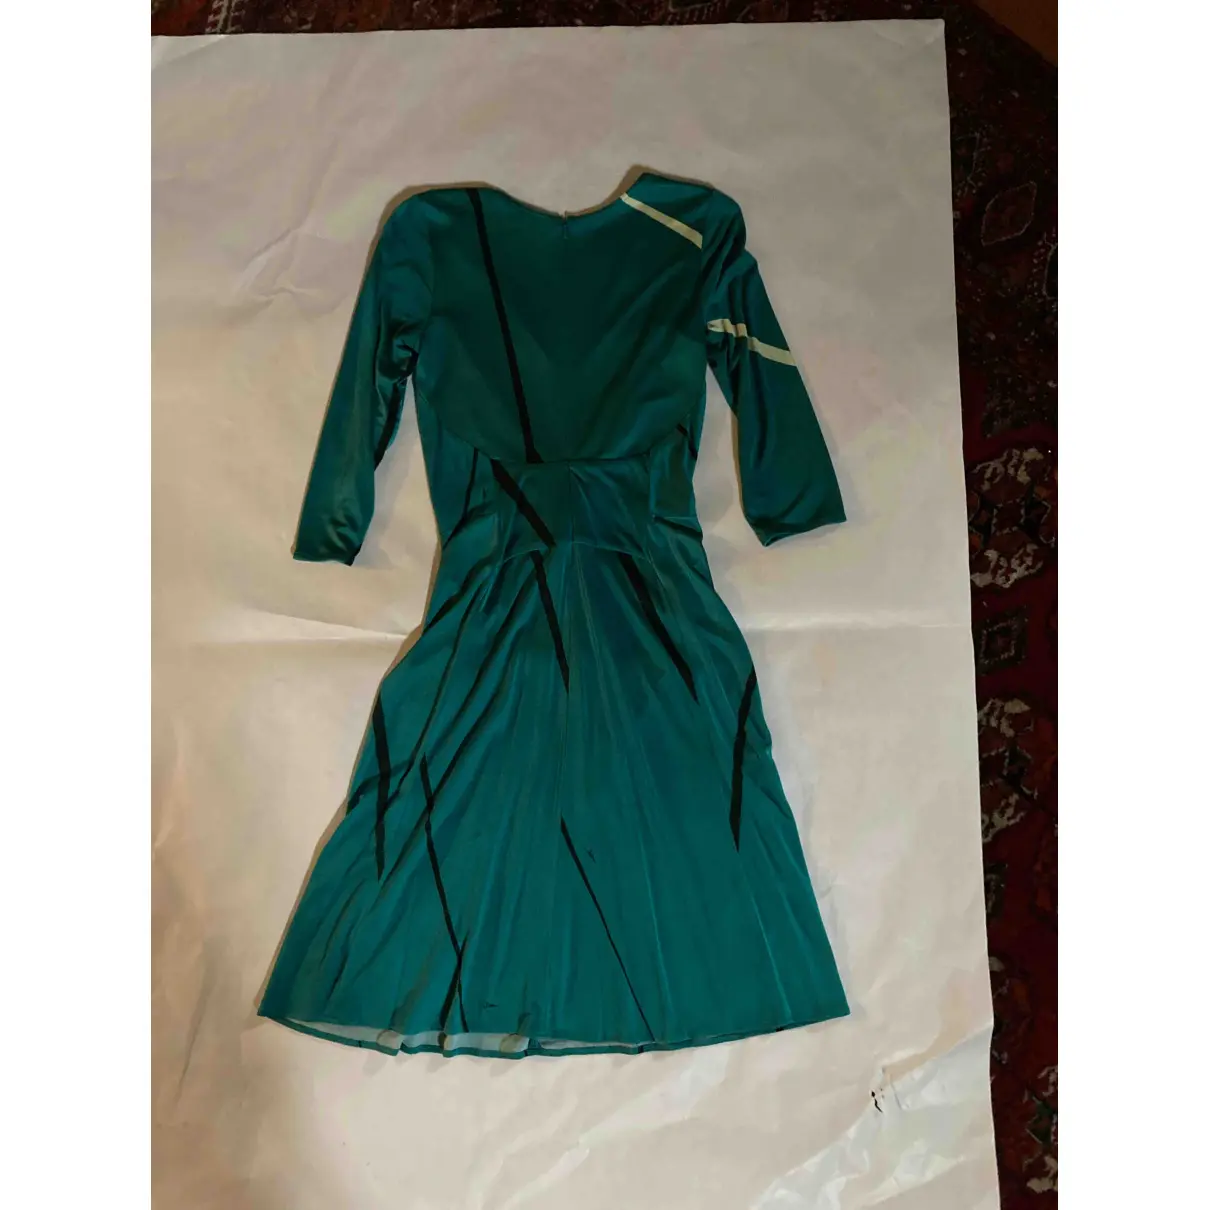 Buy Issa Silk mid-length dress online